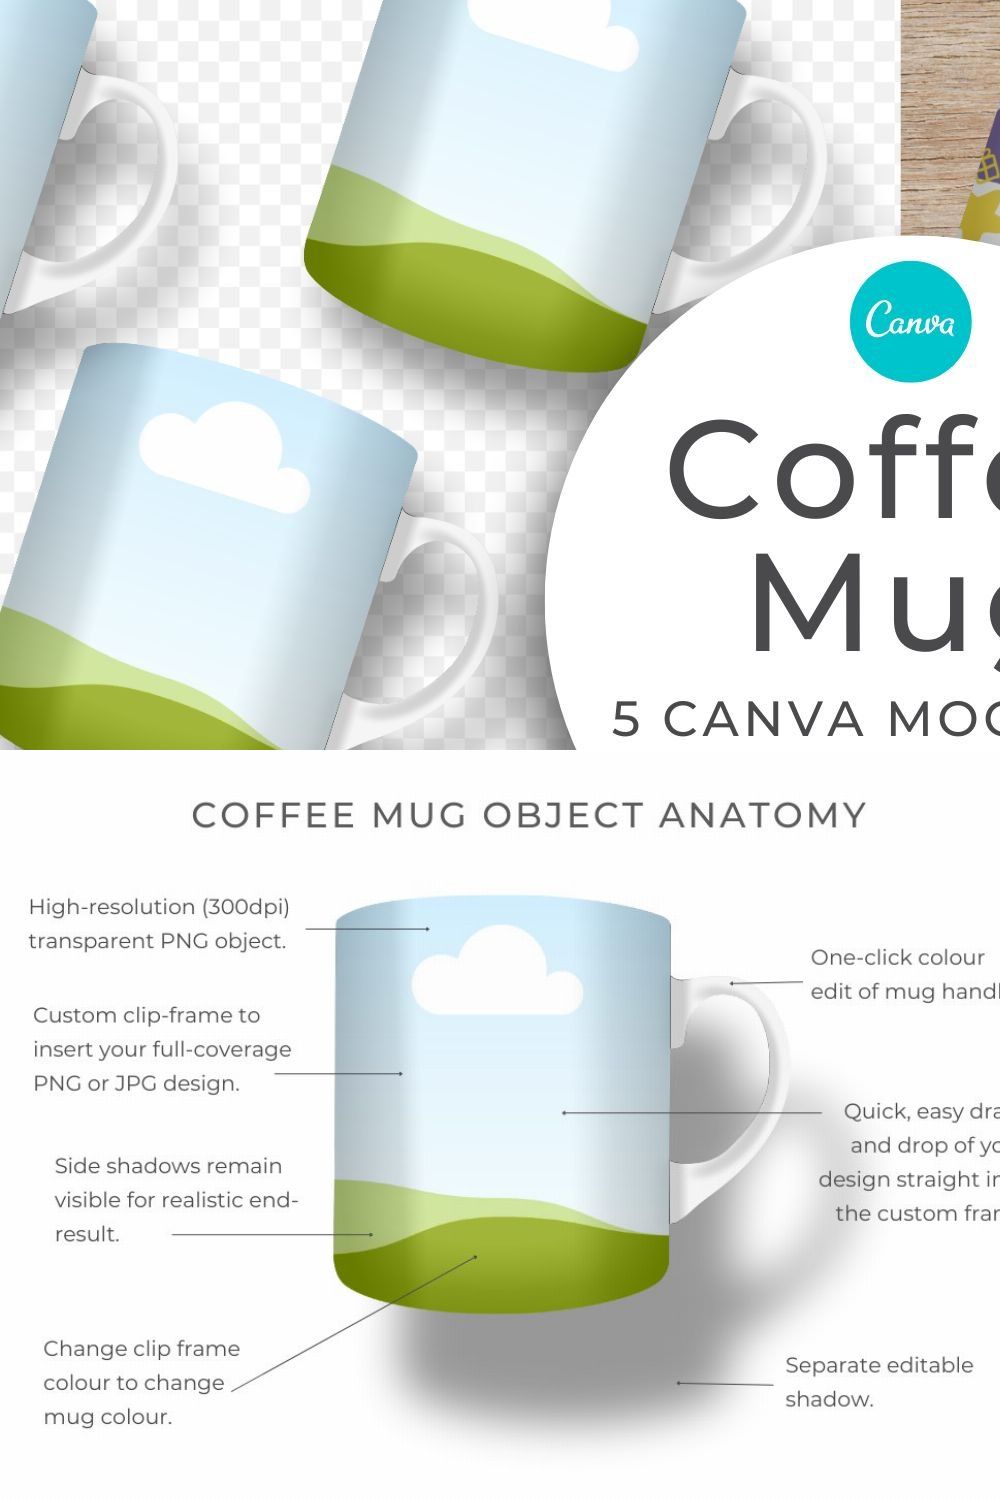 Ceramic Coffee Mug Mockup for Canva pinterest preview image.